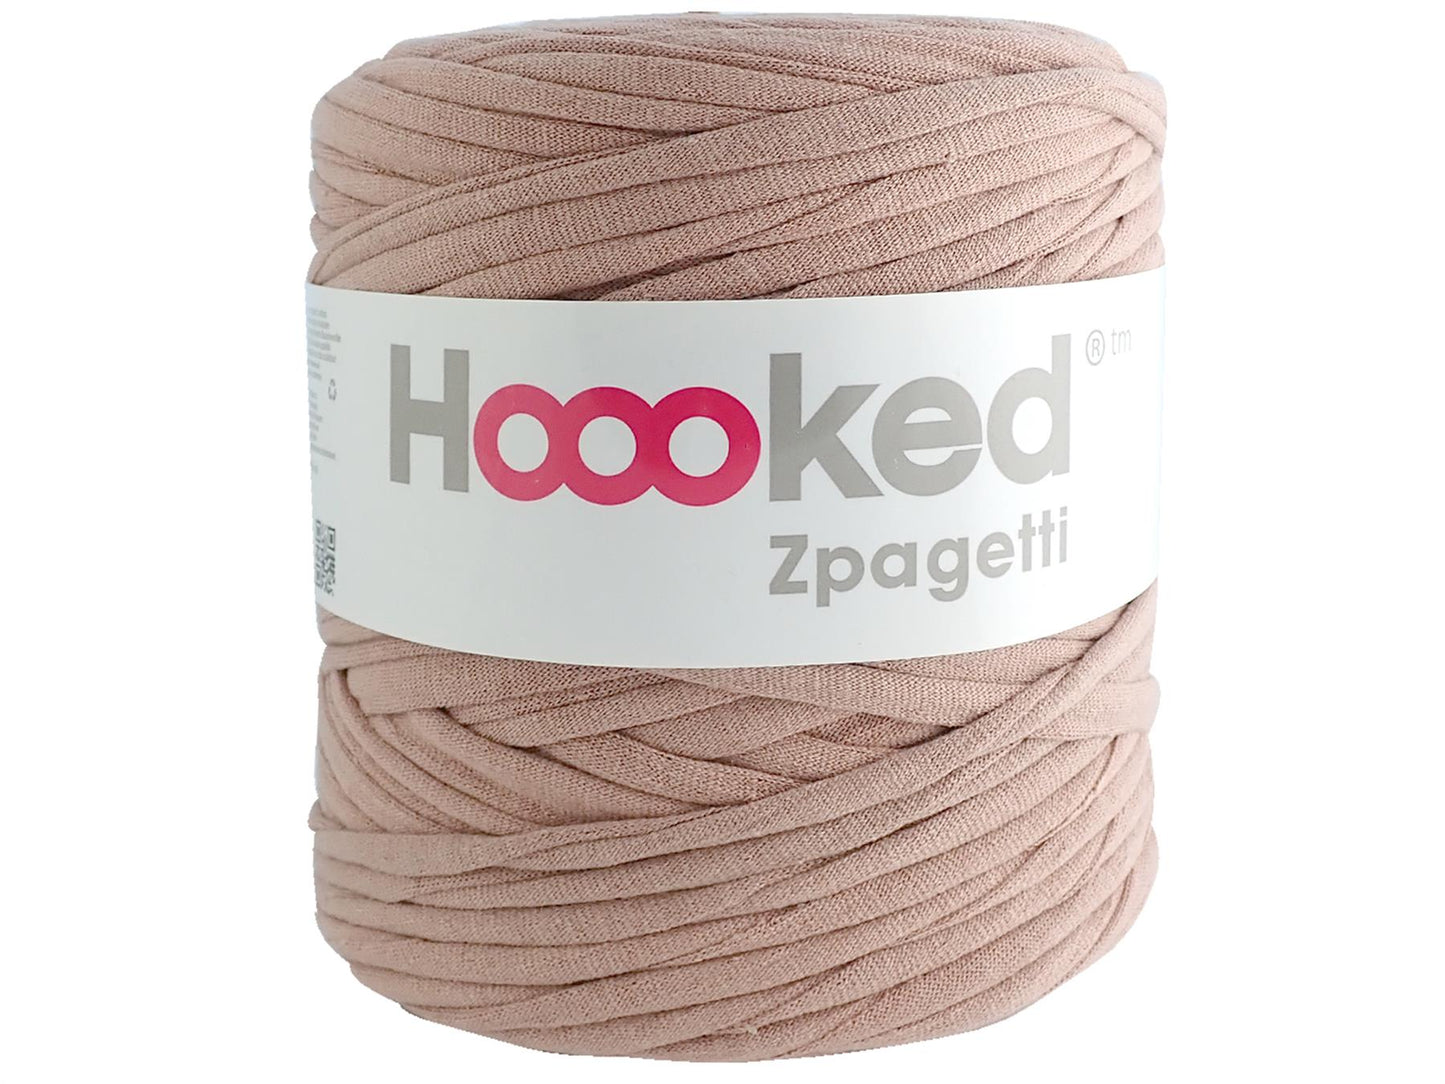 Hoooked Zpagetti Dark Taupe Cotton T-Shirt Yarn - 120M 700g